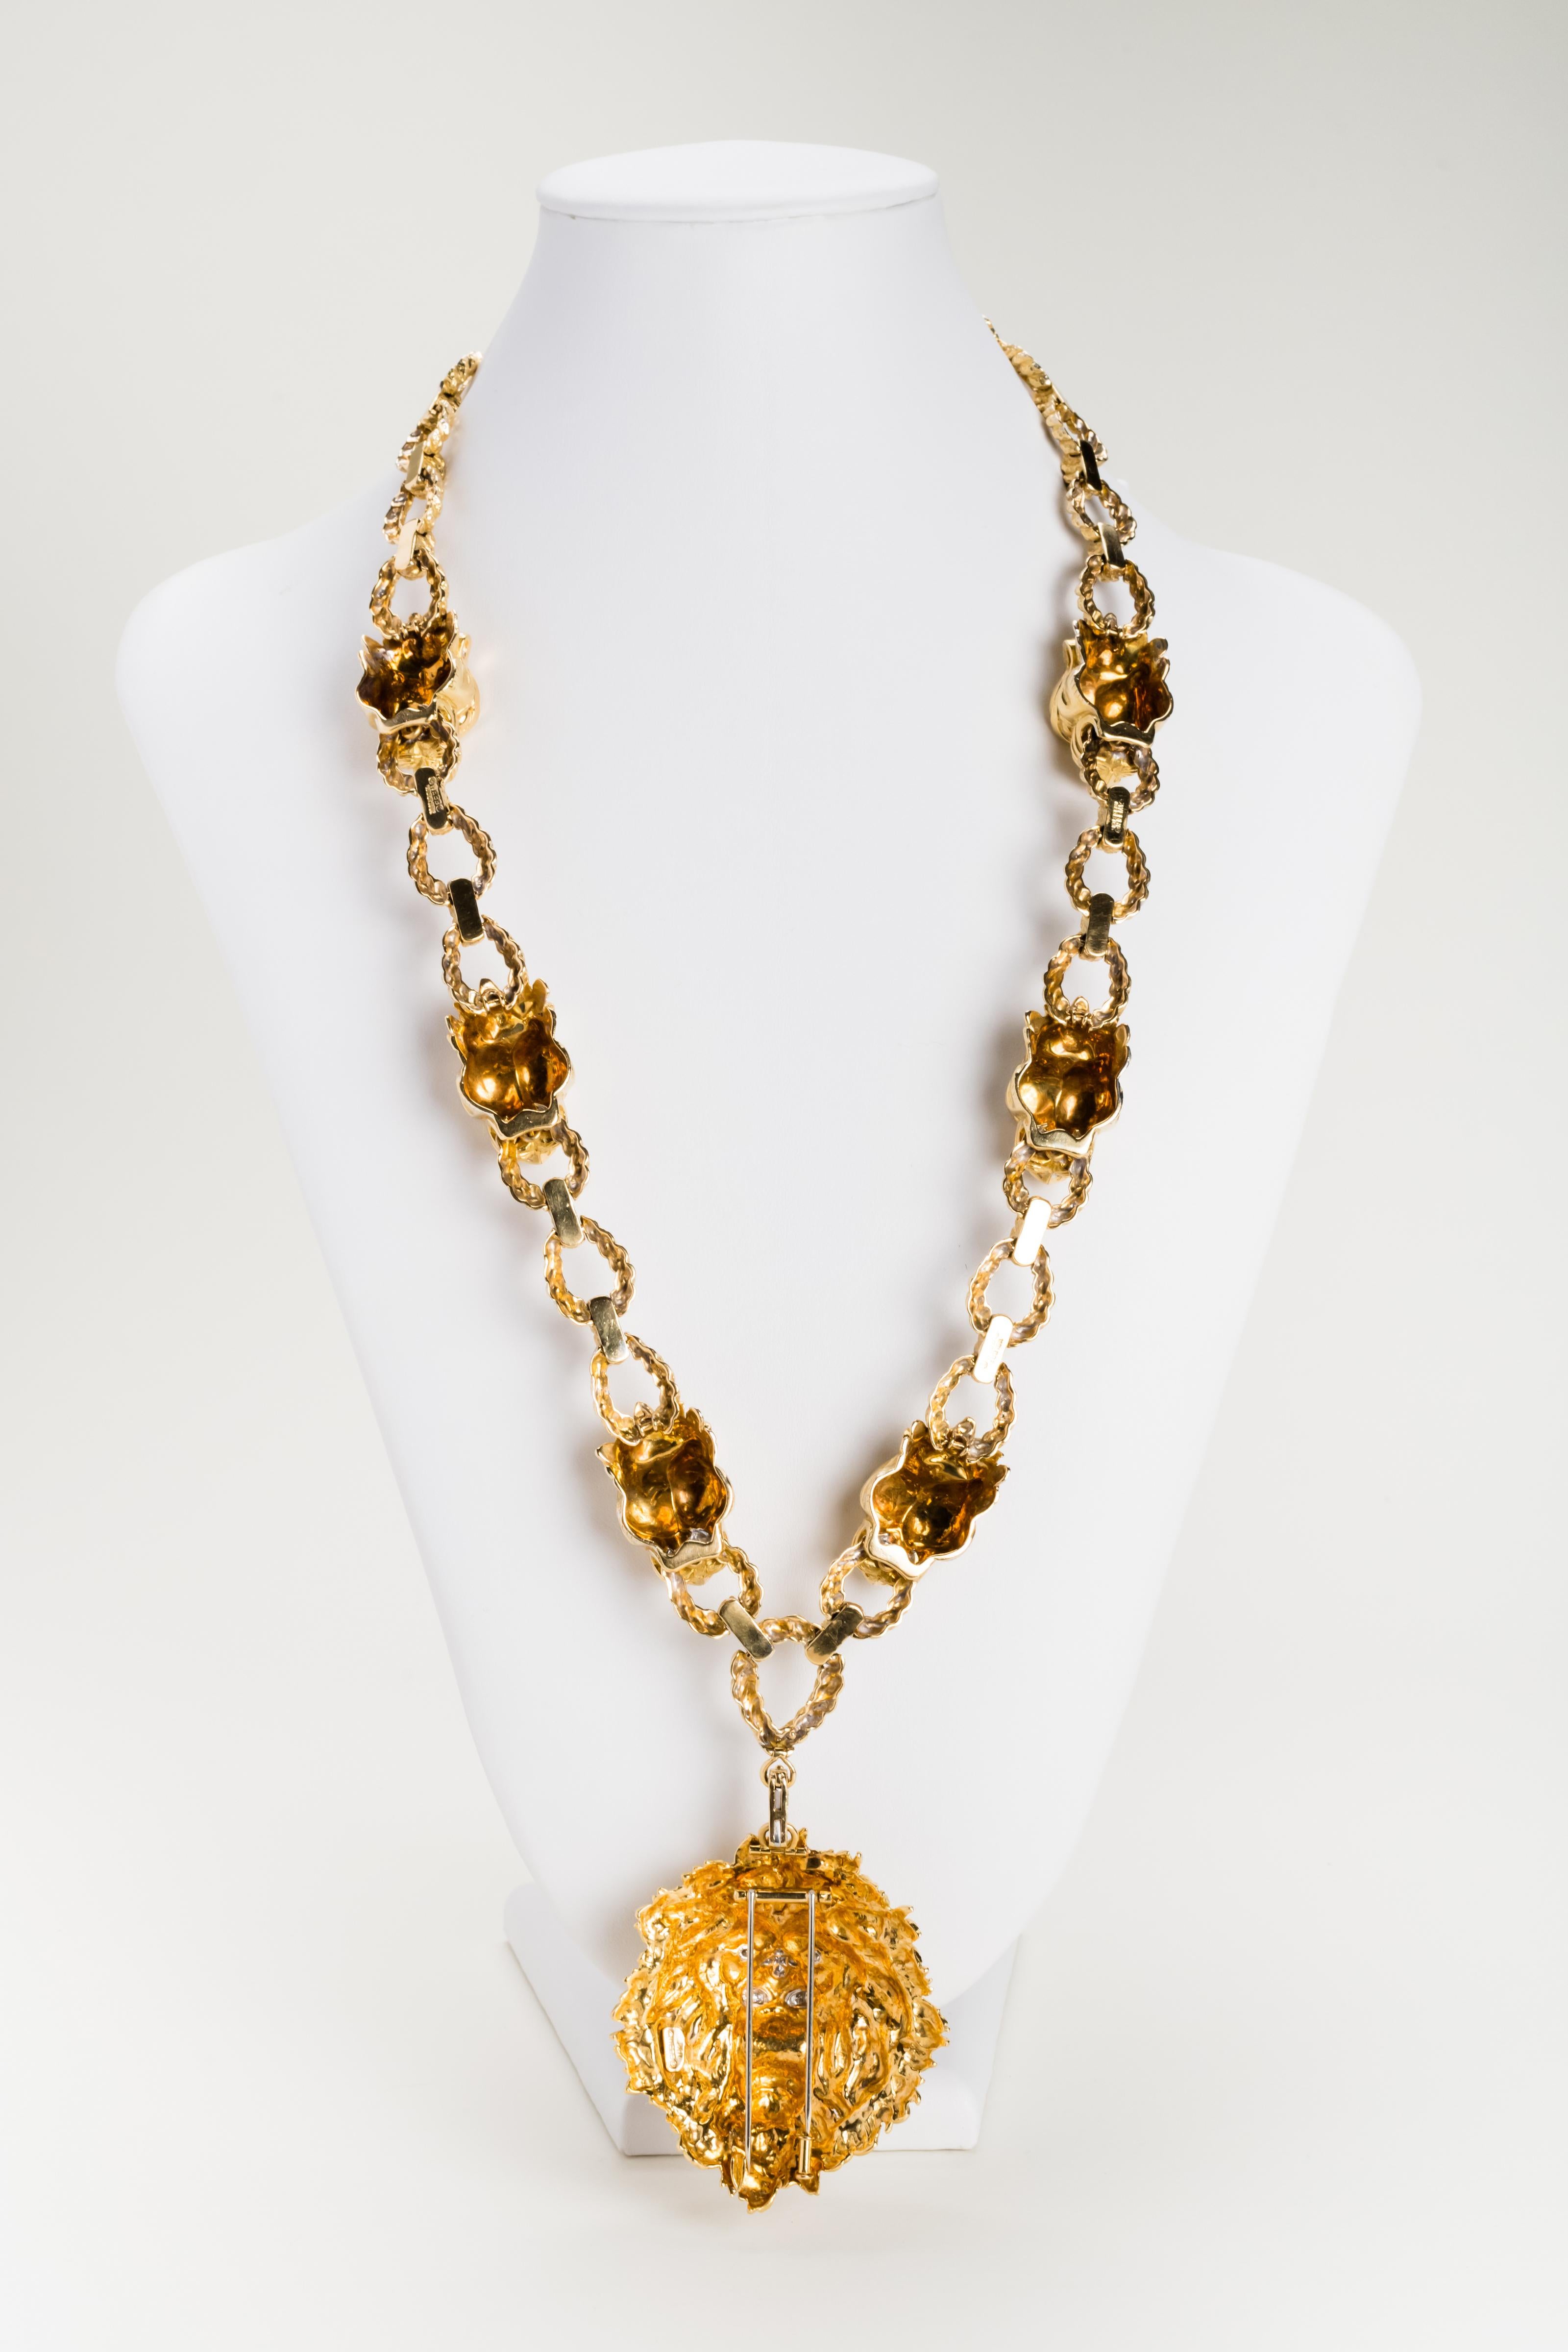 David Webb 18 Karat Gold Necklace with Lion Head Pendant, circa 1965 3